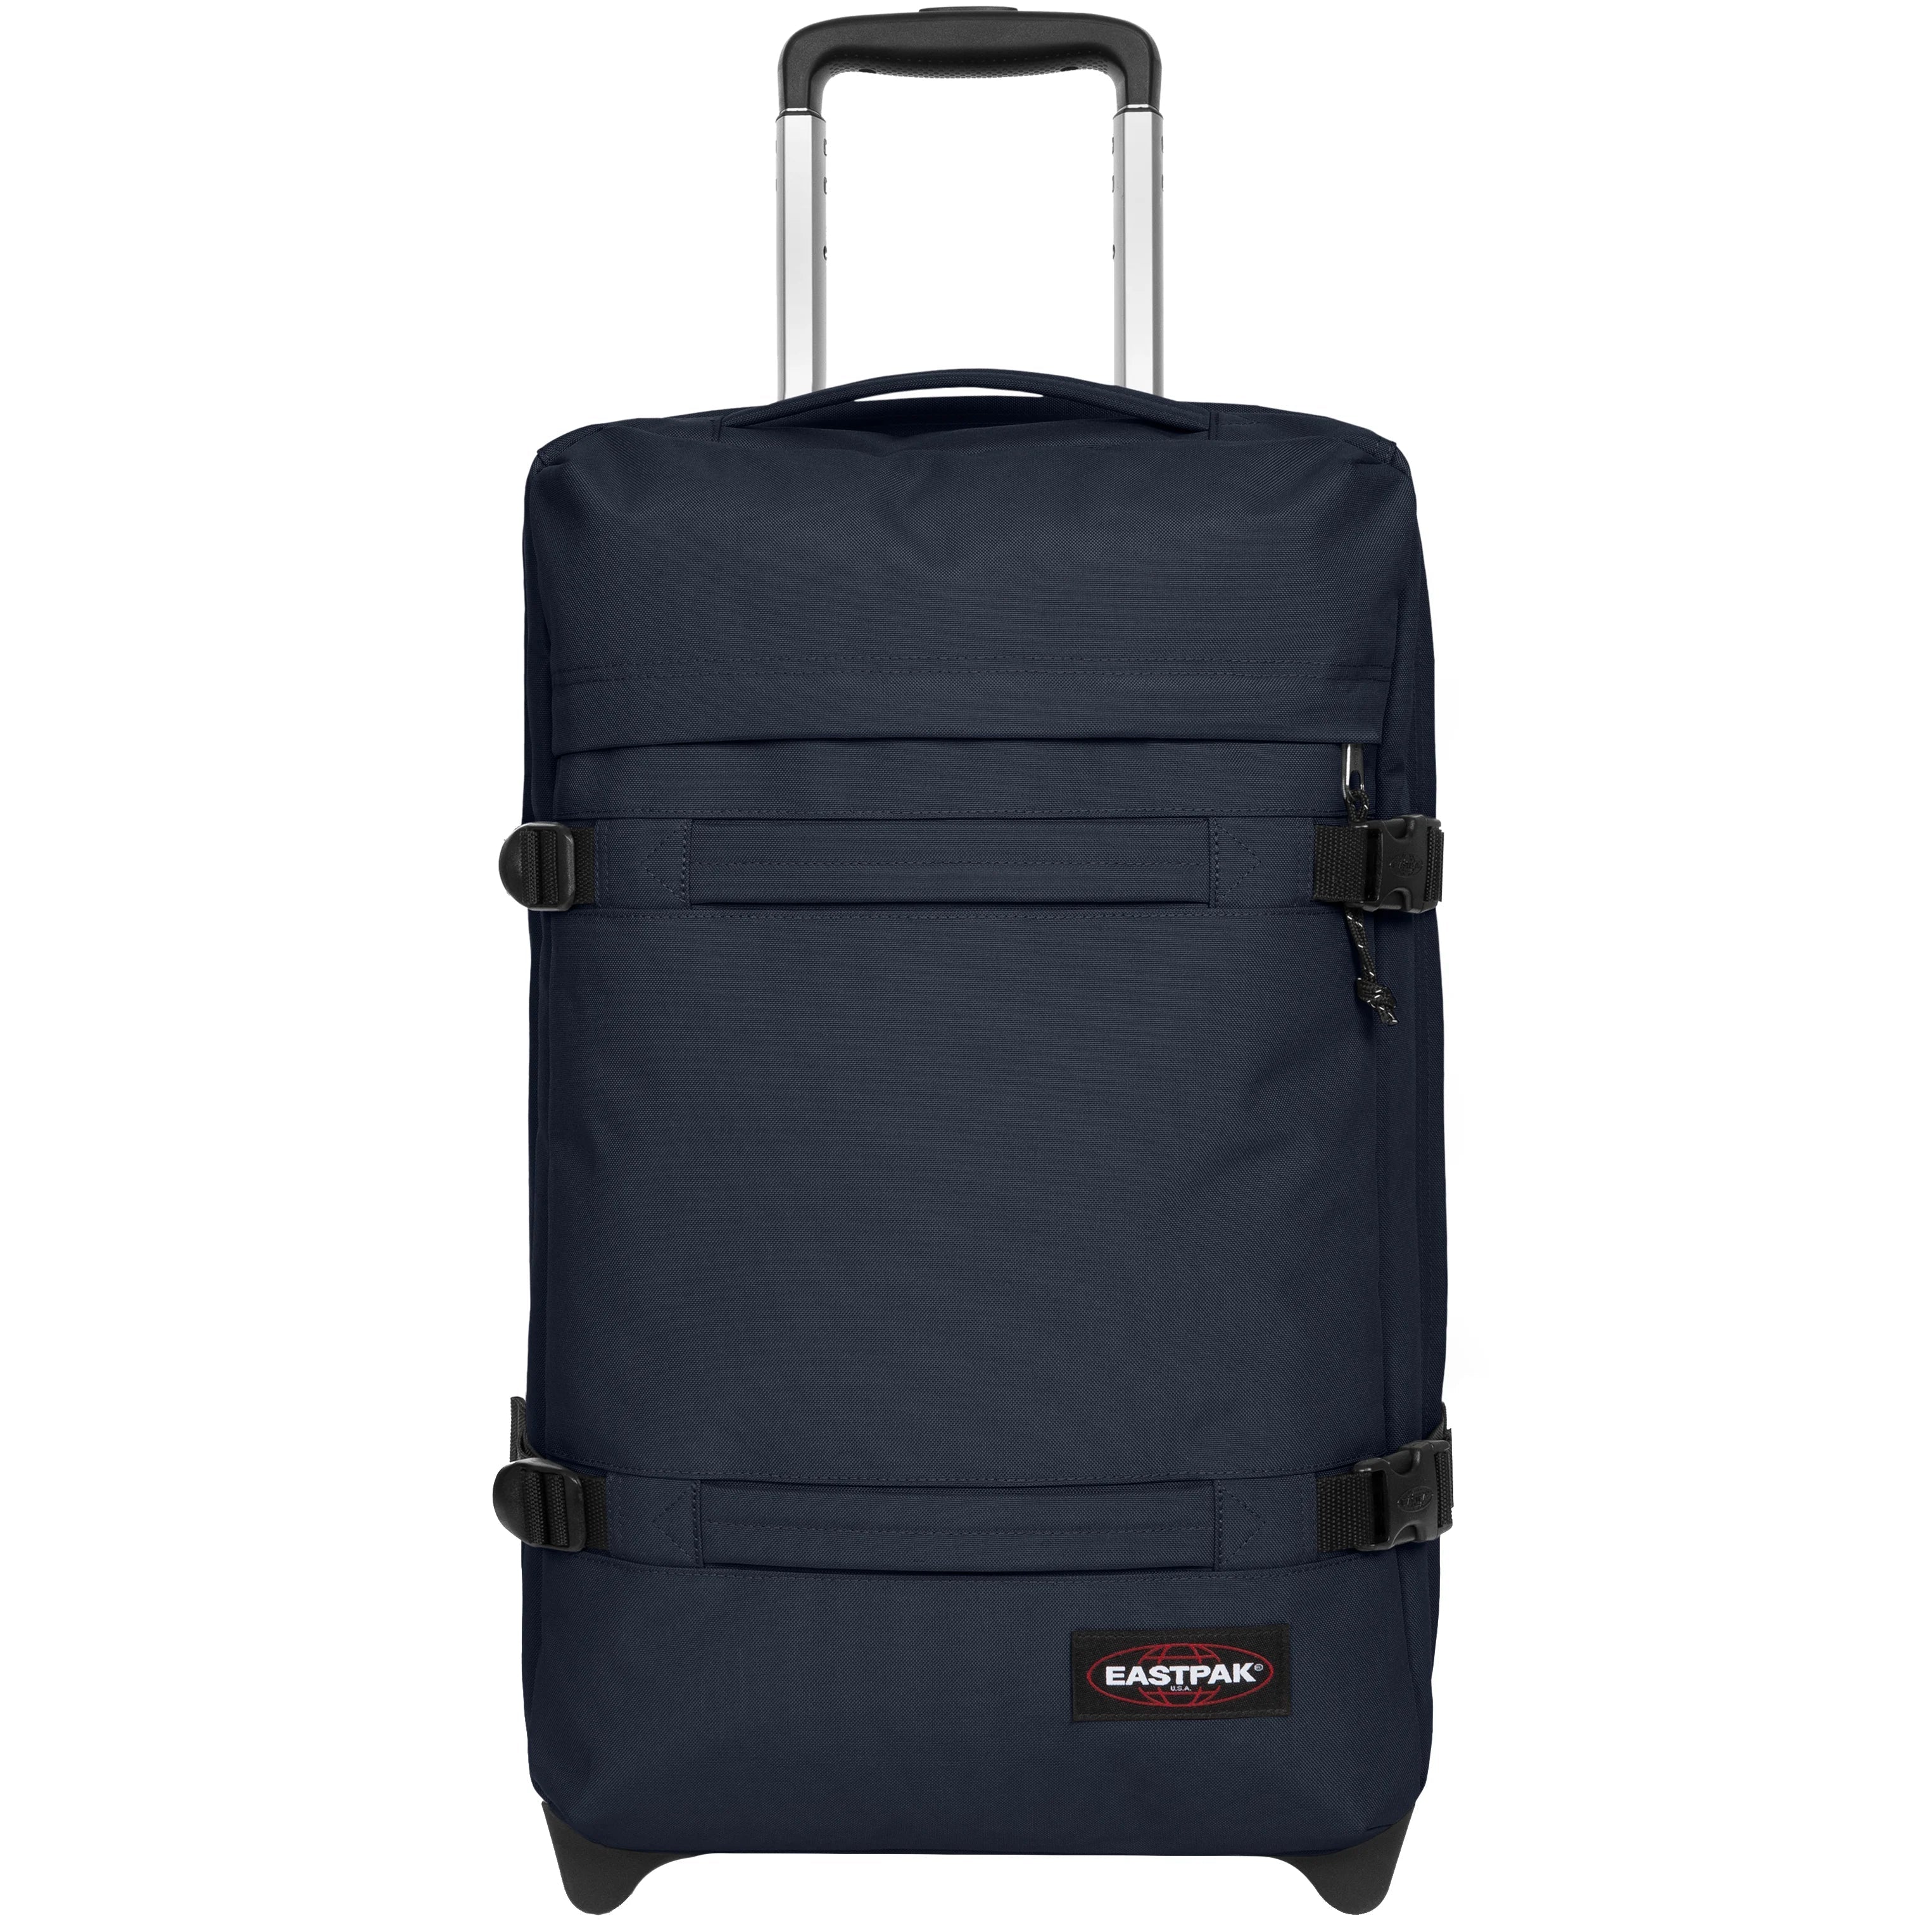 Eastpak Authentic Travel Transit'r S Rolling Travel Bag 51 cm - Ultra Marine